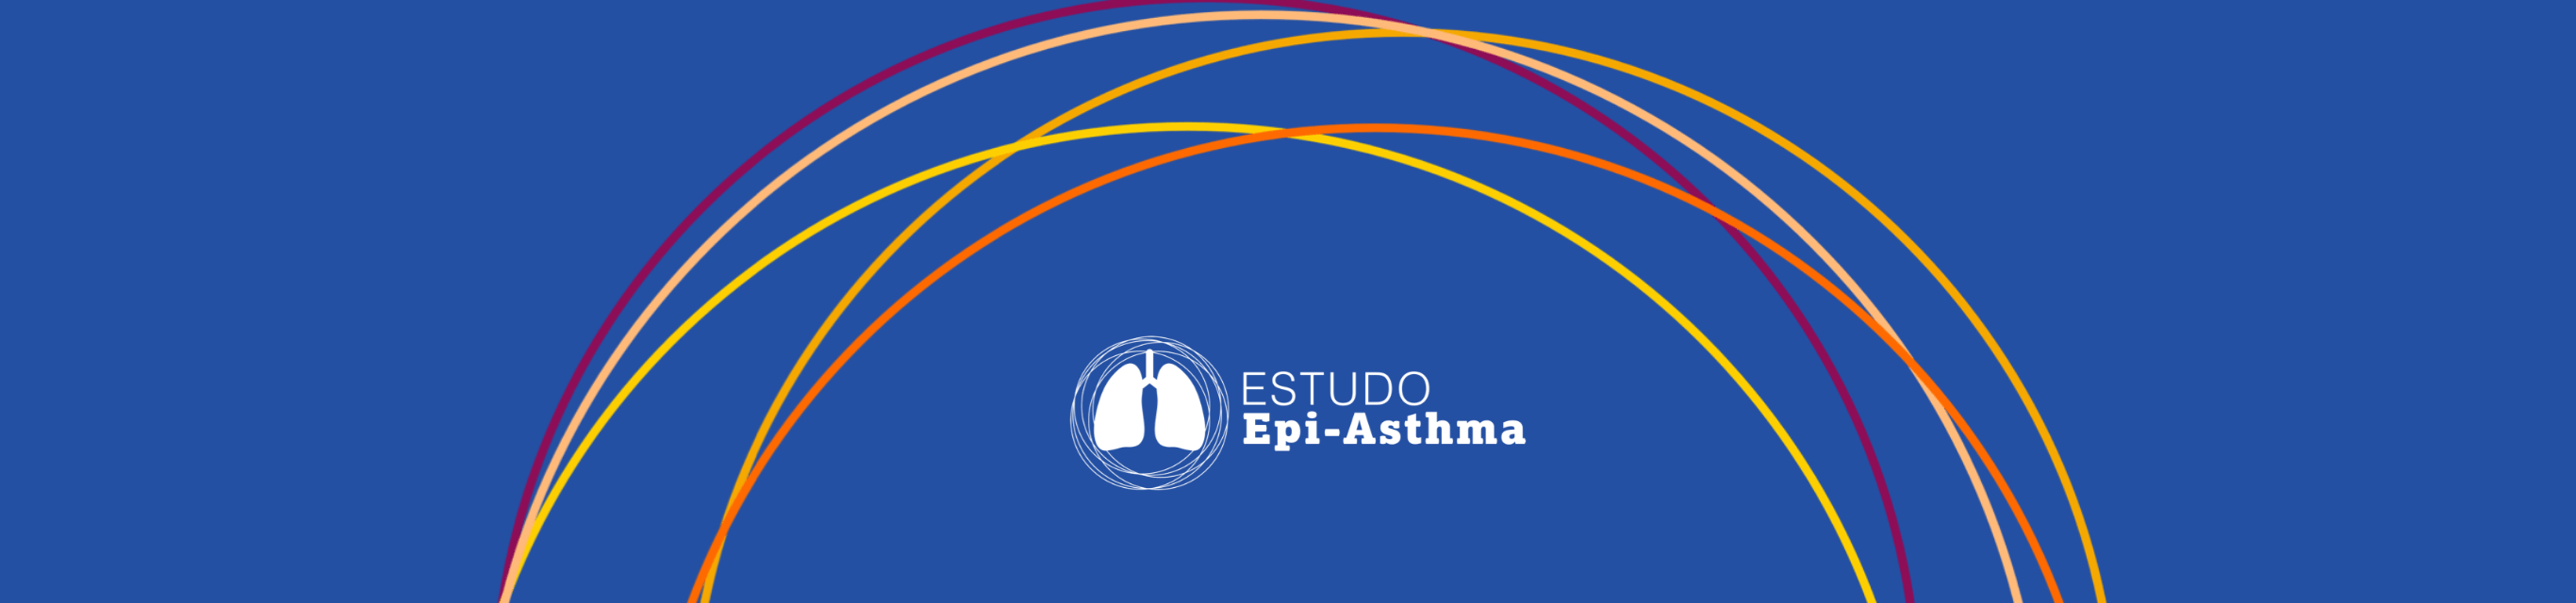 EPI-ASTHMA